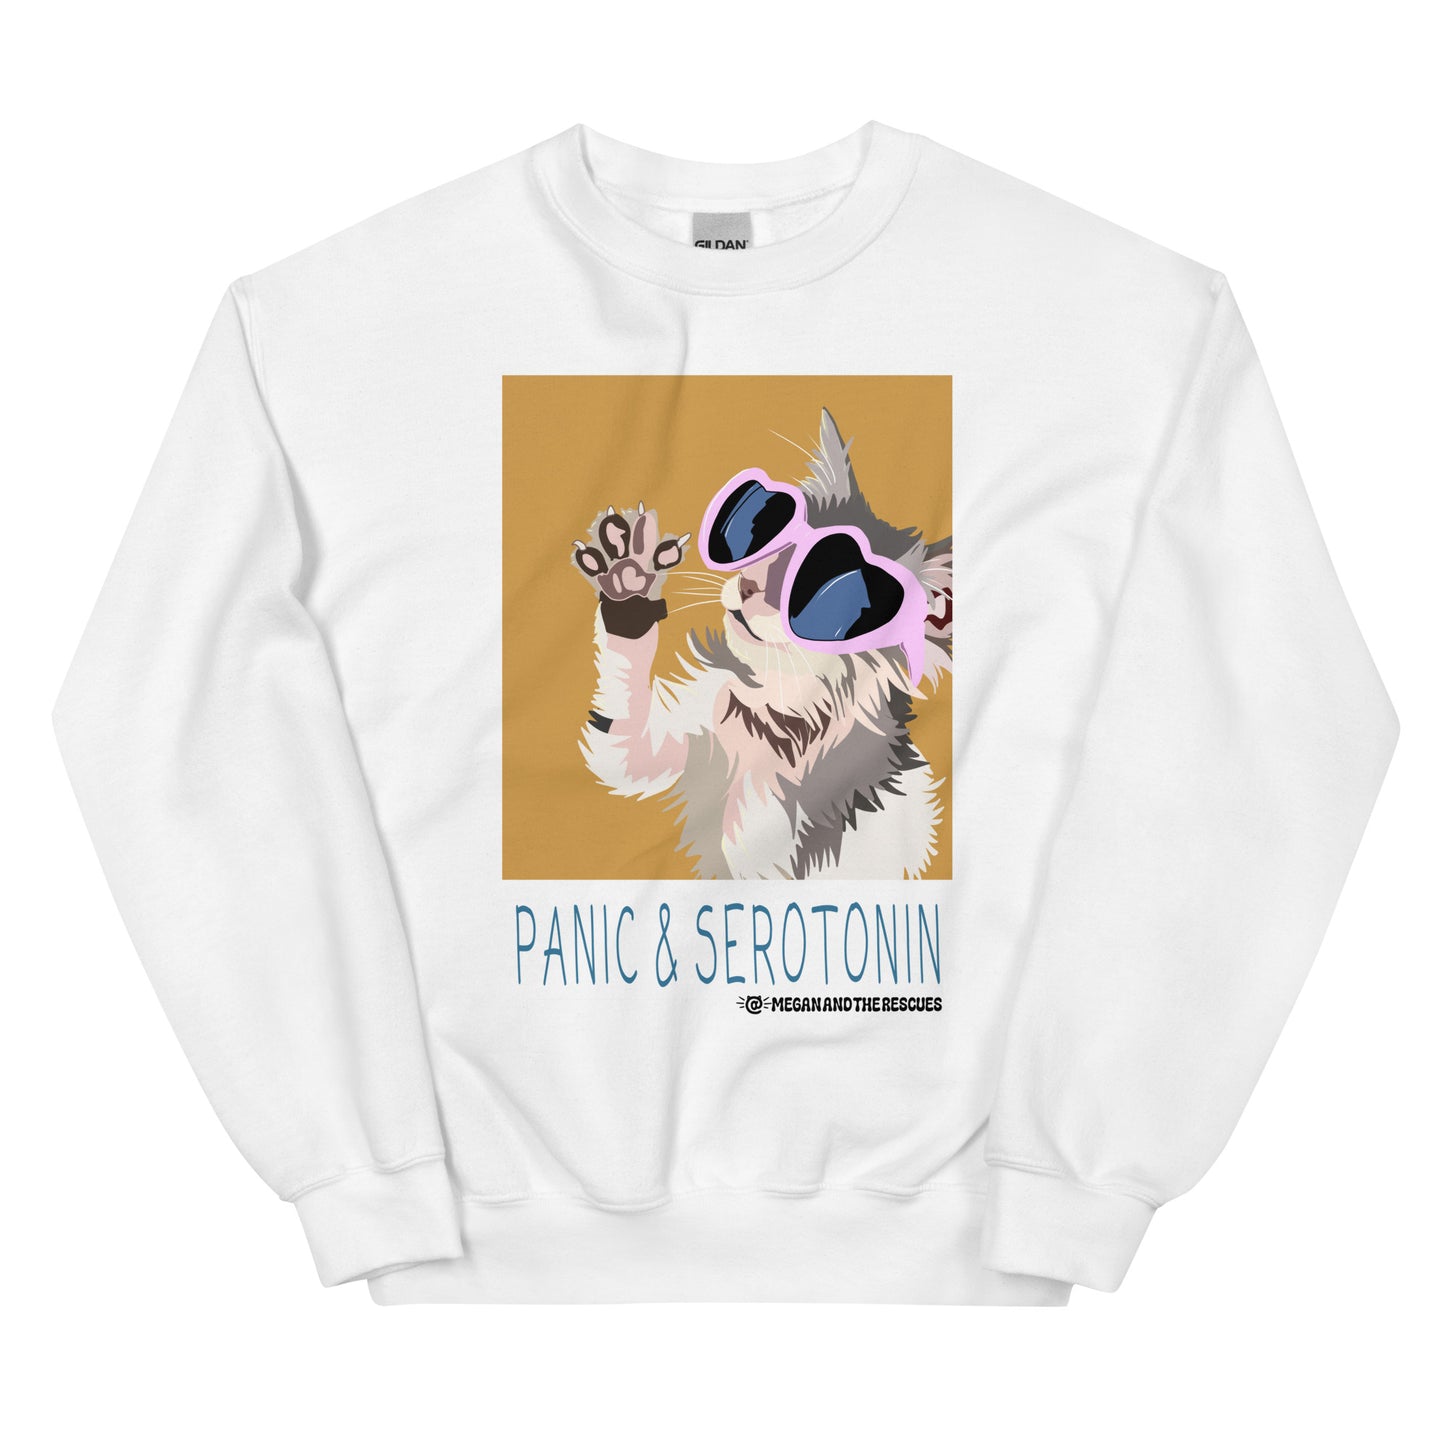 Panic & Serotonin - Unisex Sweatshirt